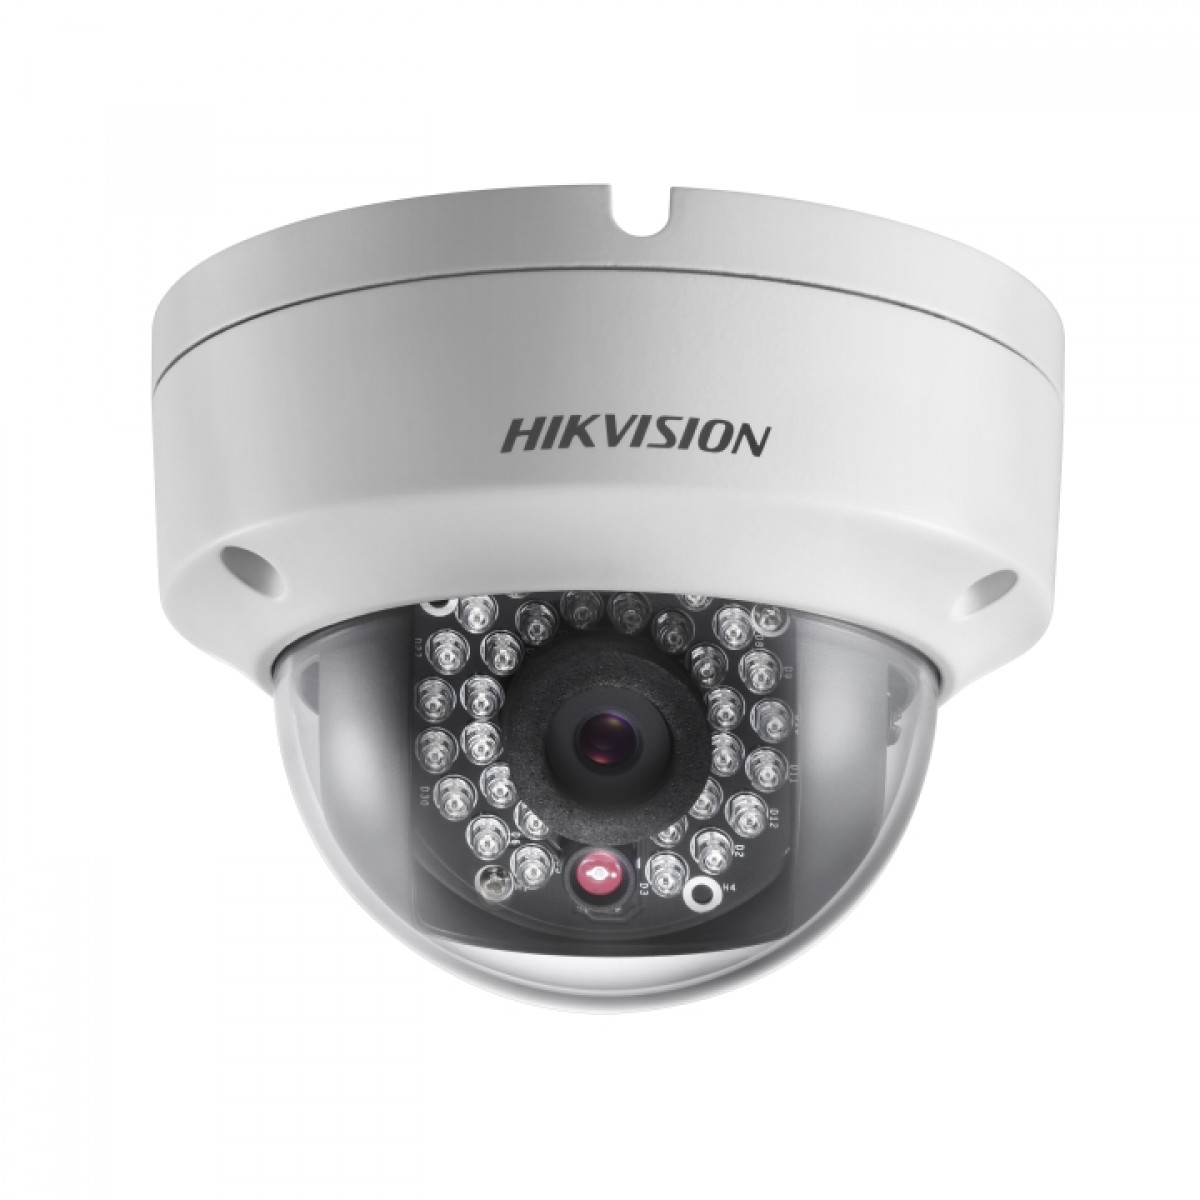 hikvision ip camera system